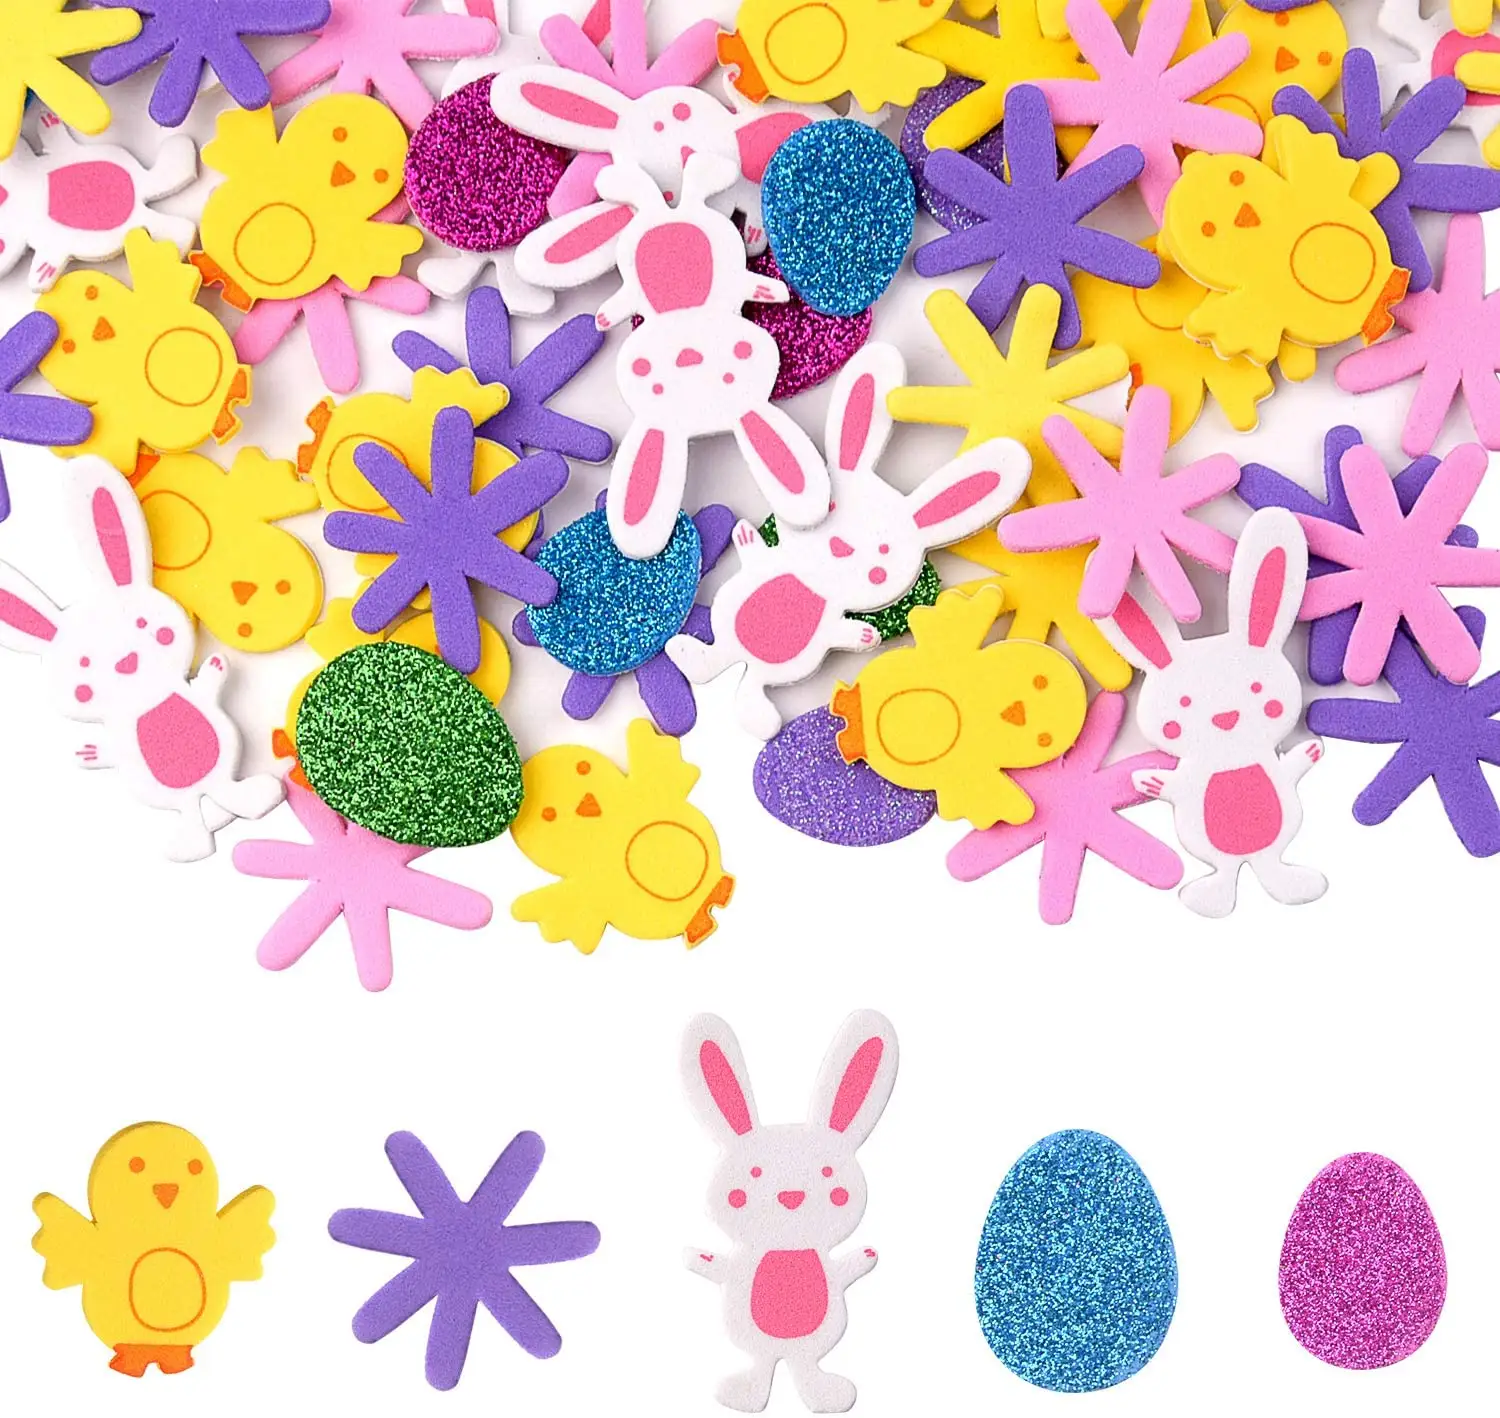 Xieli 160 Pcs Easter Foam Aufkleber Tierform Selbst klebende Oster aufkleber Glitter Egg Aufkleber für Oster feier Dekoration